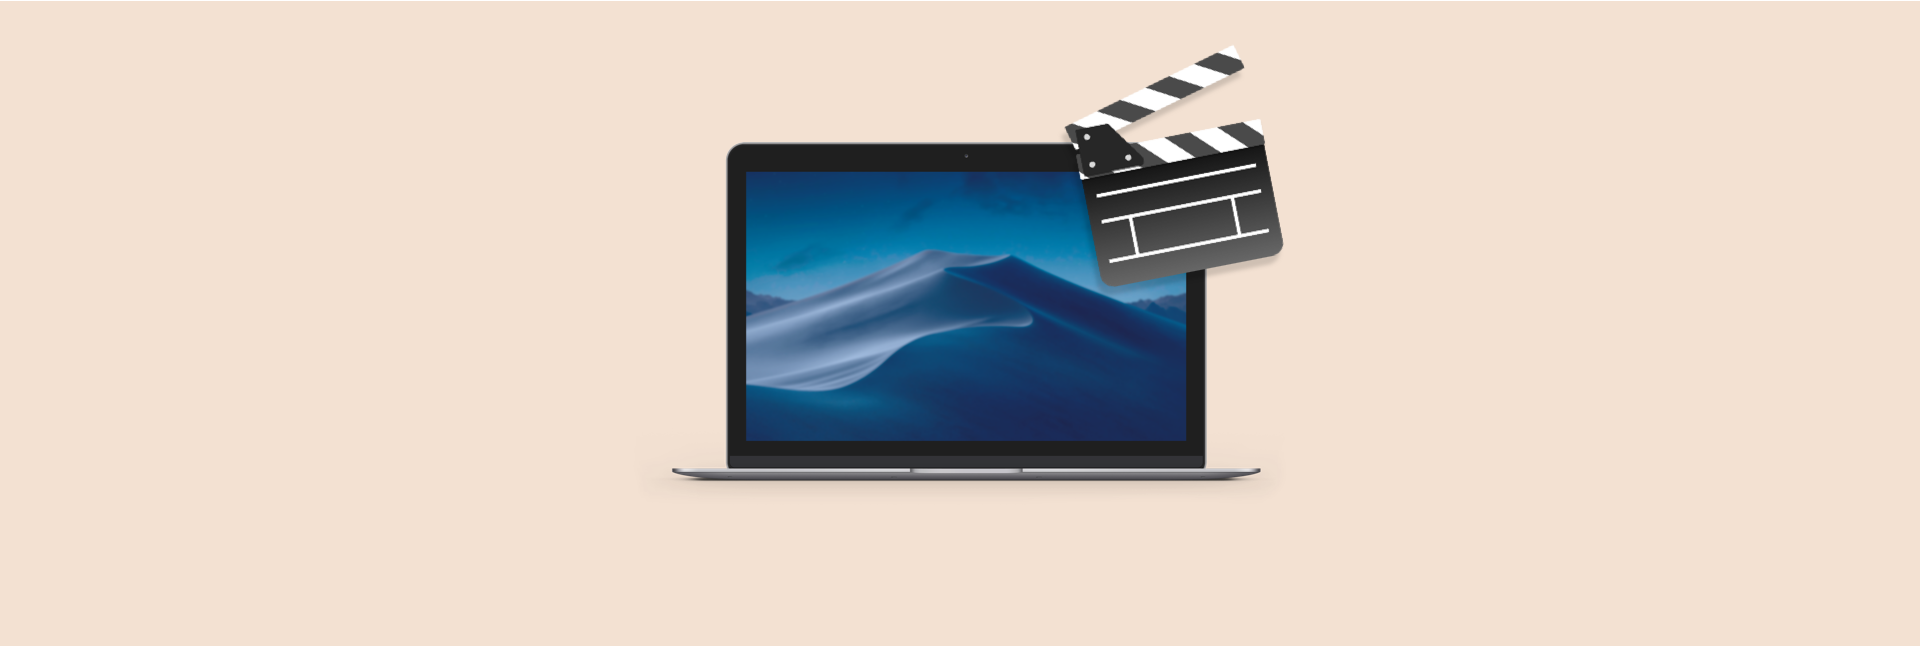 download movies on netflix on mac